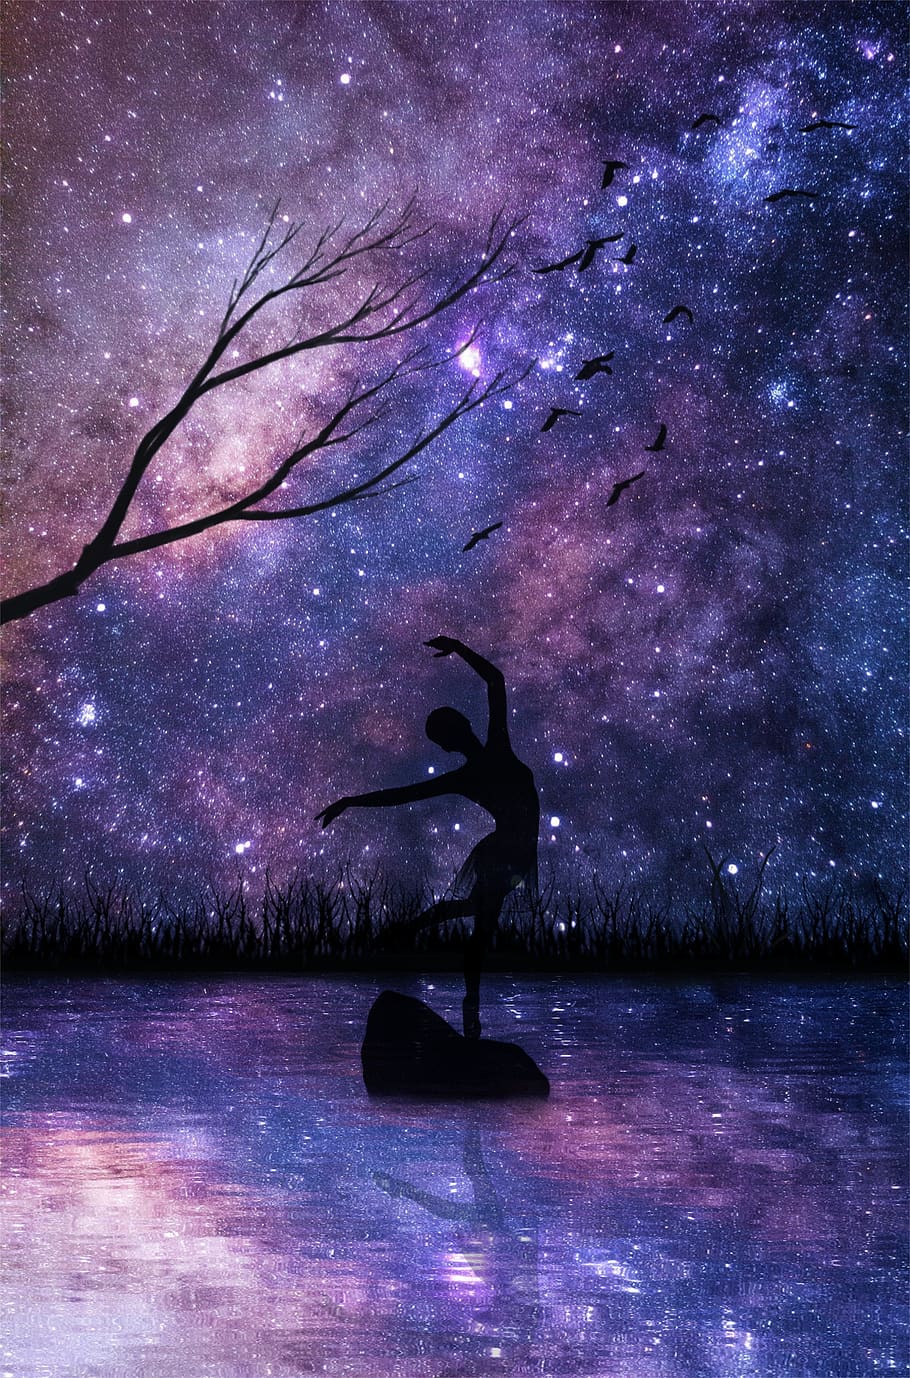 dancer, reflection, water, women, girl, tree, birds, nebula, night, stone